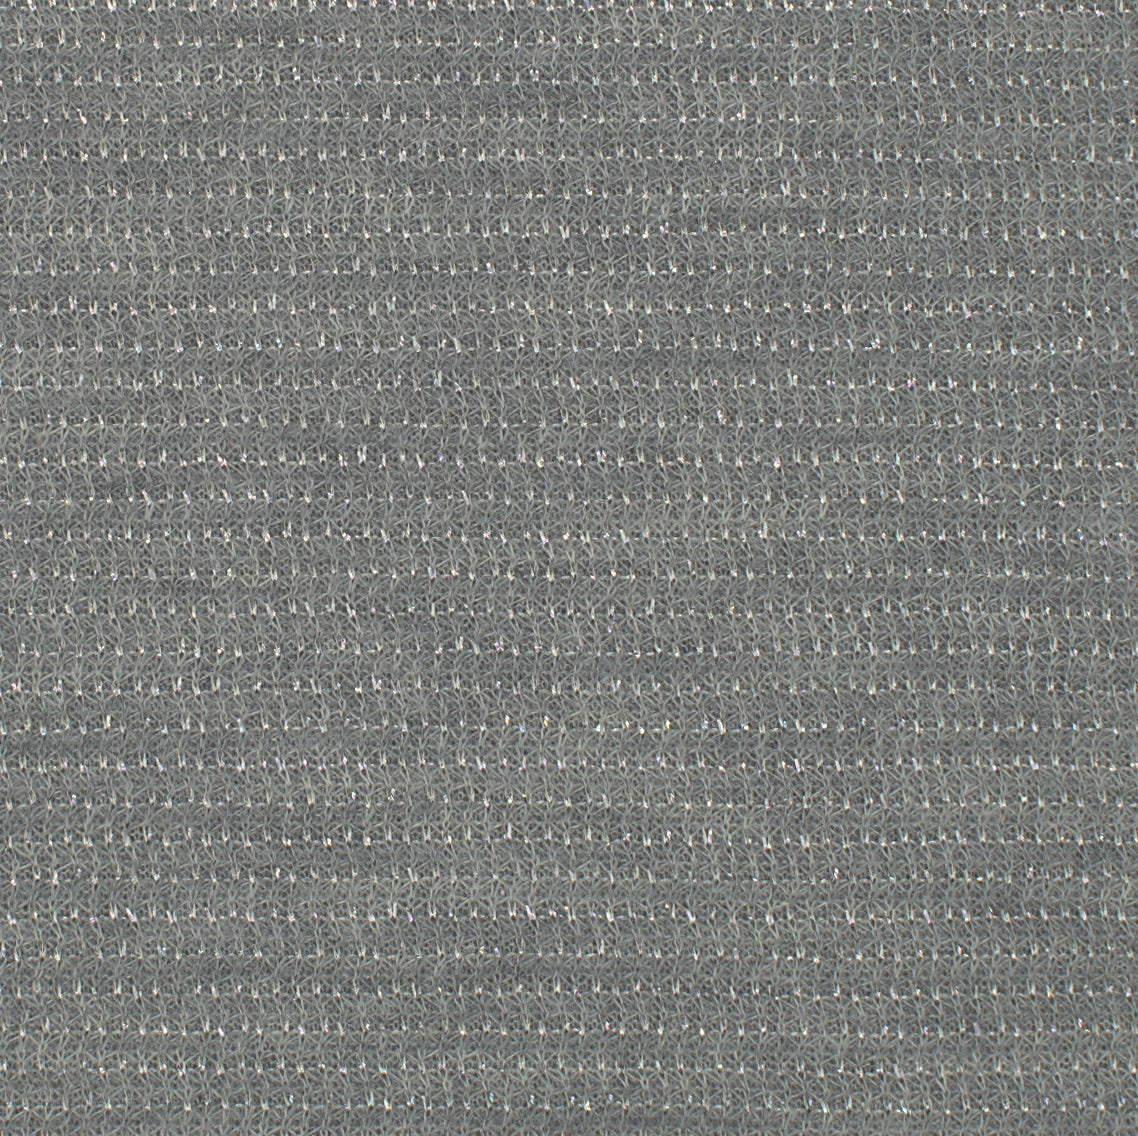 18009-03 56" 240g/yd Metallic Plain Dyed Blend Knit blend green knit metallic plain dyed polyester Metallic - knit fabric - woven fabric - fabric company - fabric wholesale - fabric b2b - fabric factory - high quality fabric - hong kong fabric - fabric hk - acetate fabric - cotton fabric - linen fabric - metallic fabric - nylon fabric - polyester fabric - spandex fabric - chun wing hing - cwh hk - fabric worldwide ship - 針織布 - 梳織布 - 布料公司- 布料批發 - 香港布料 - 秦榮興